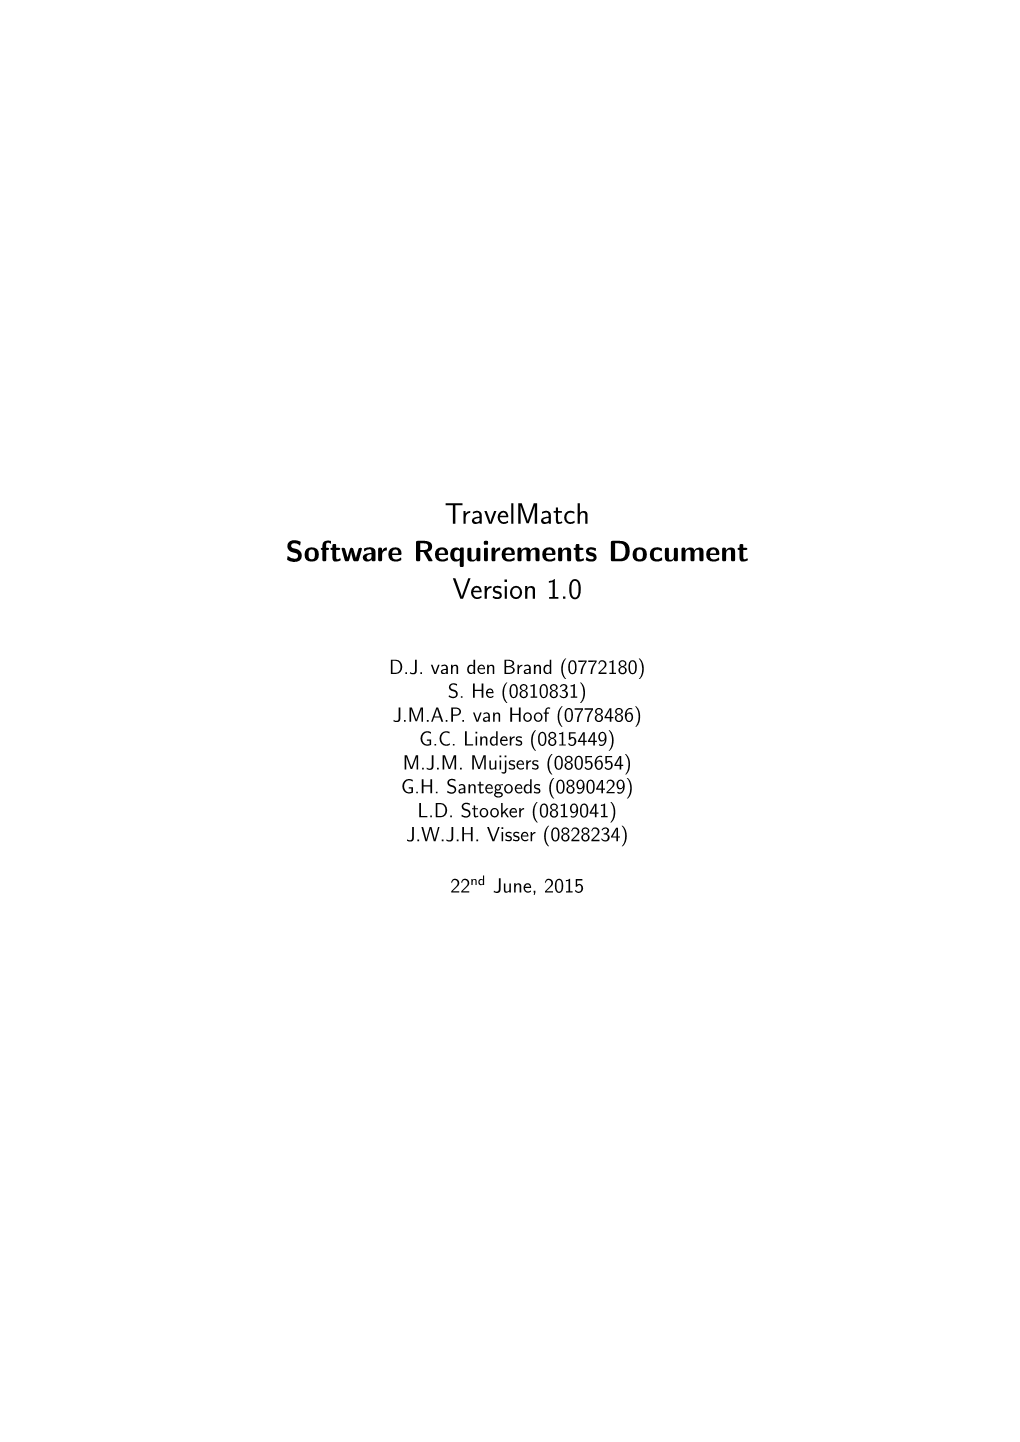 Travelmatch Software Requirements Document Version 1.0